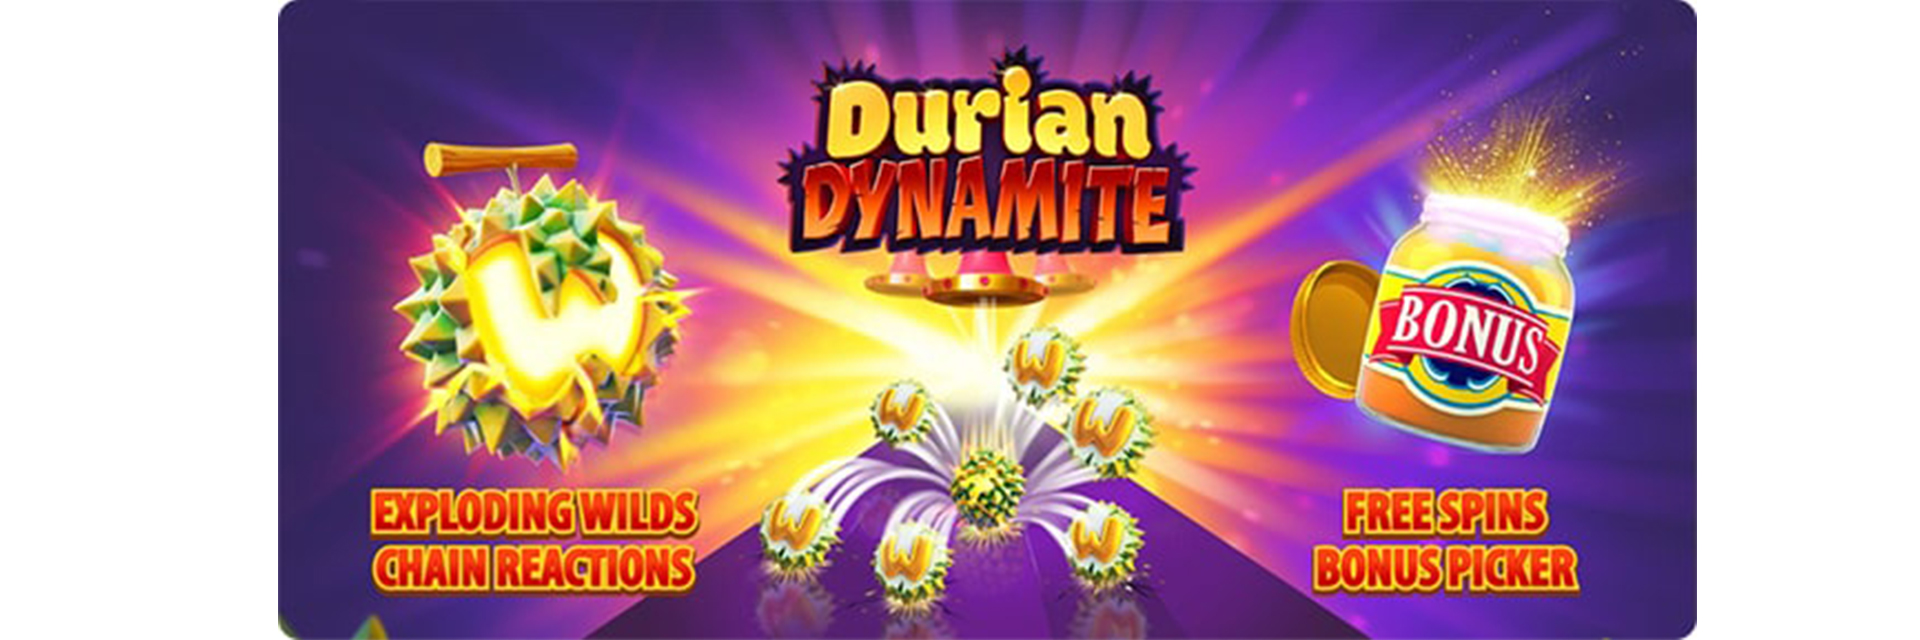 Durian Dynamite slot machine.